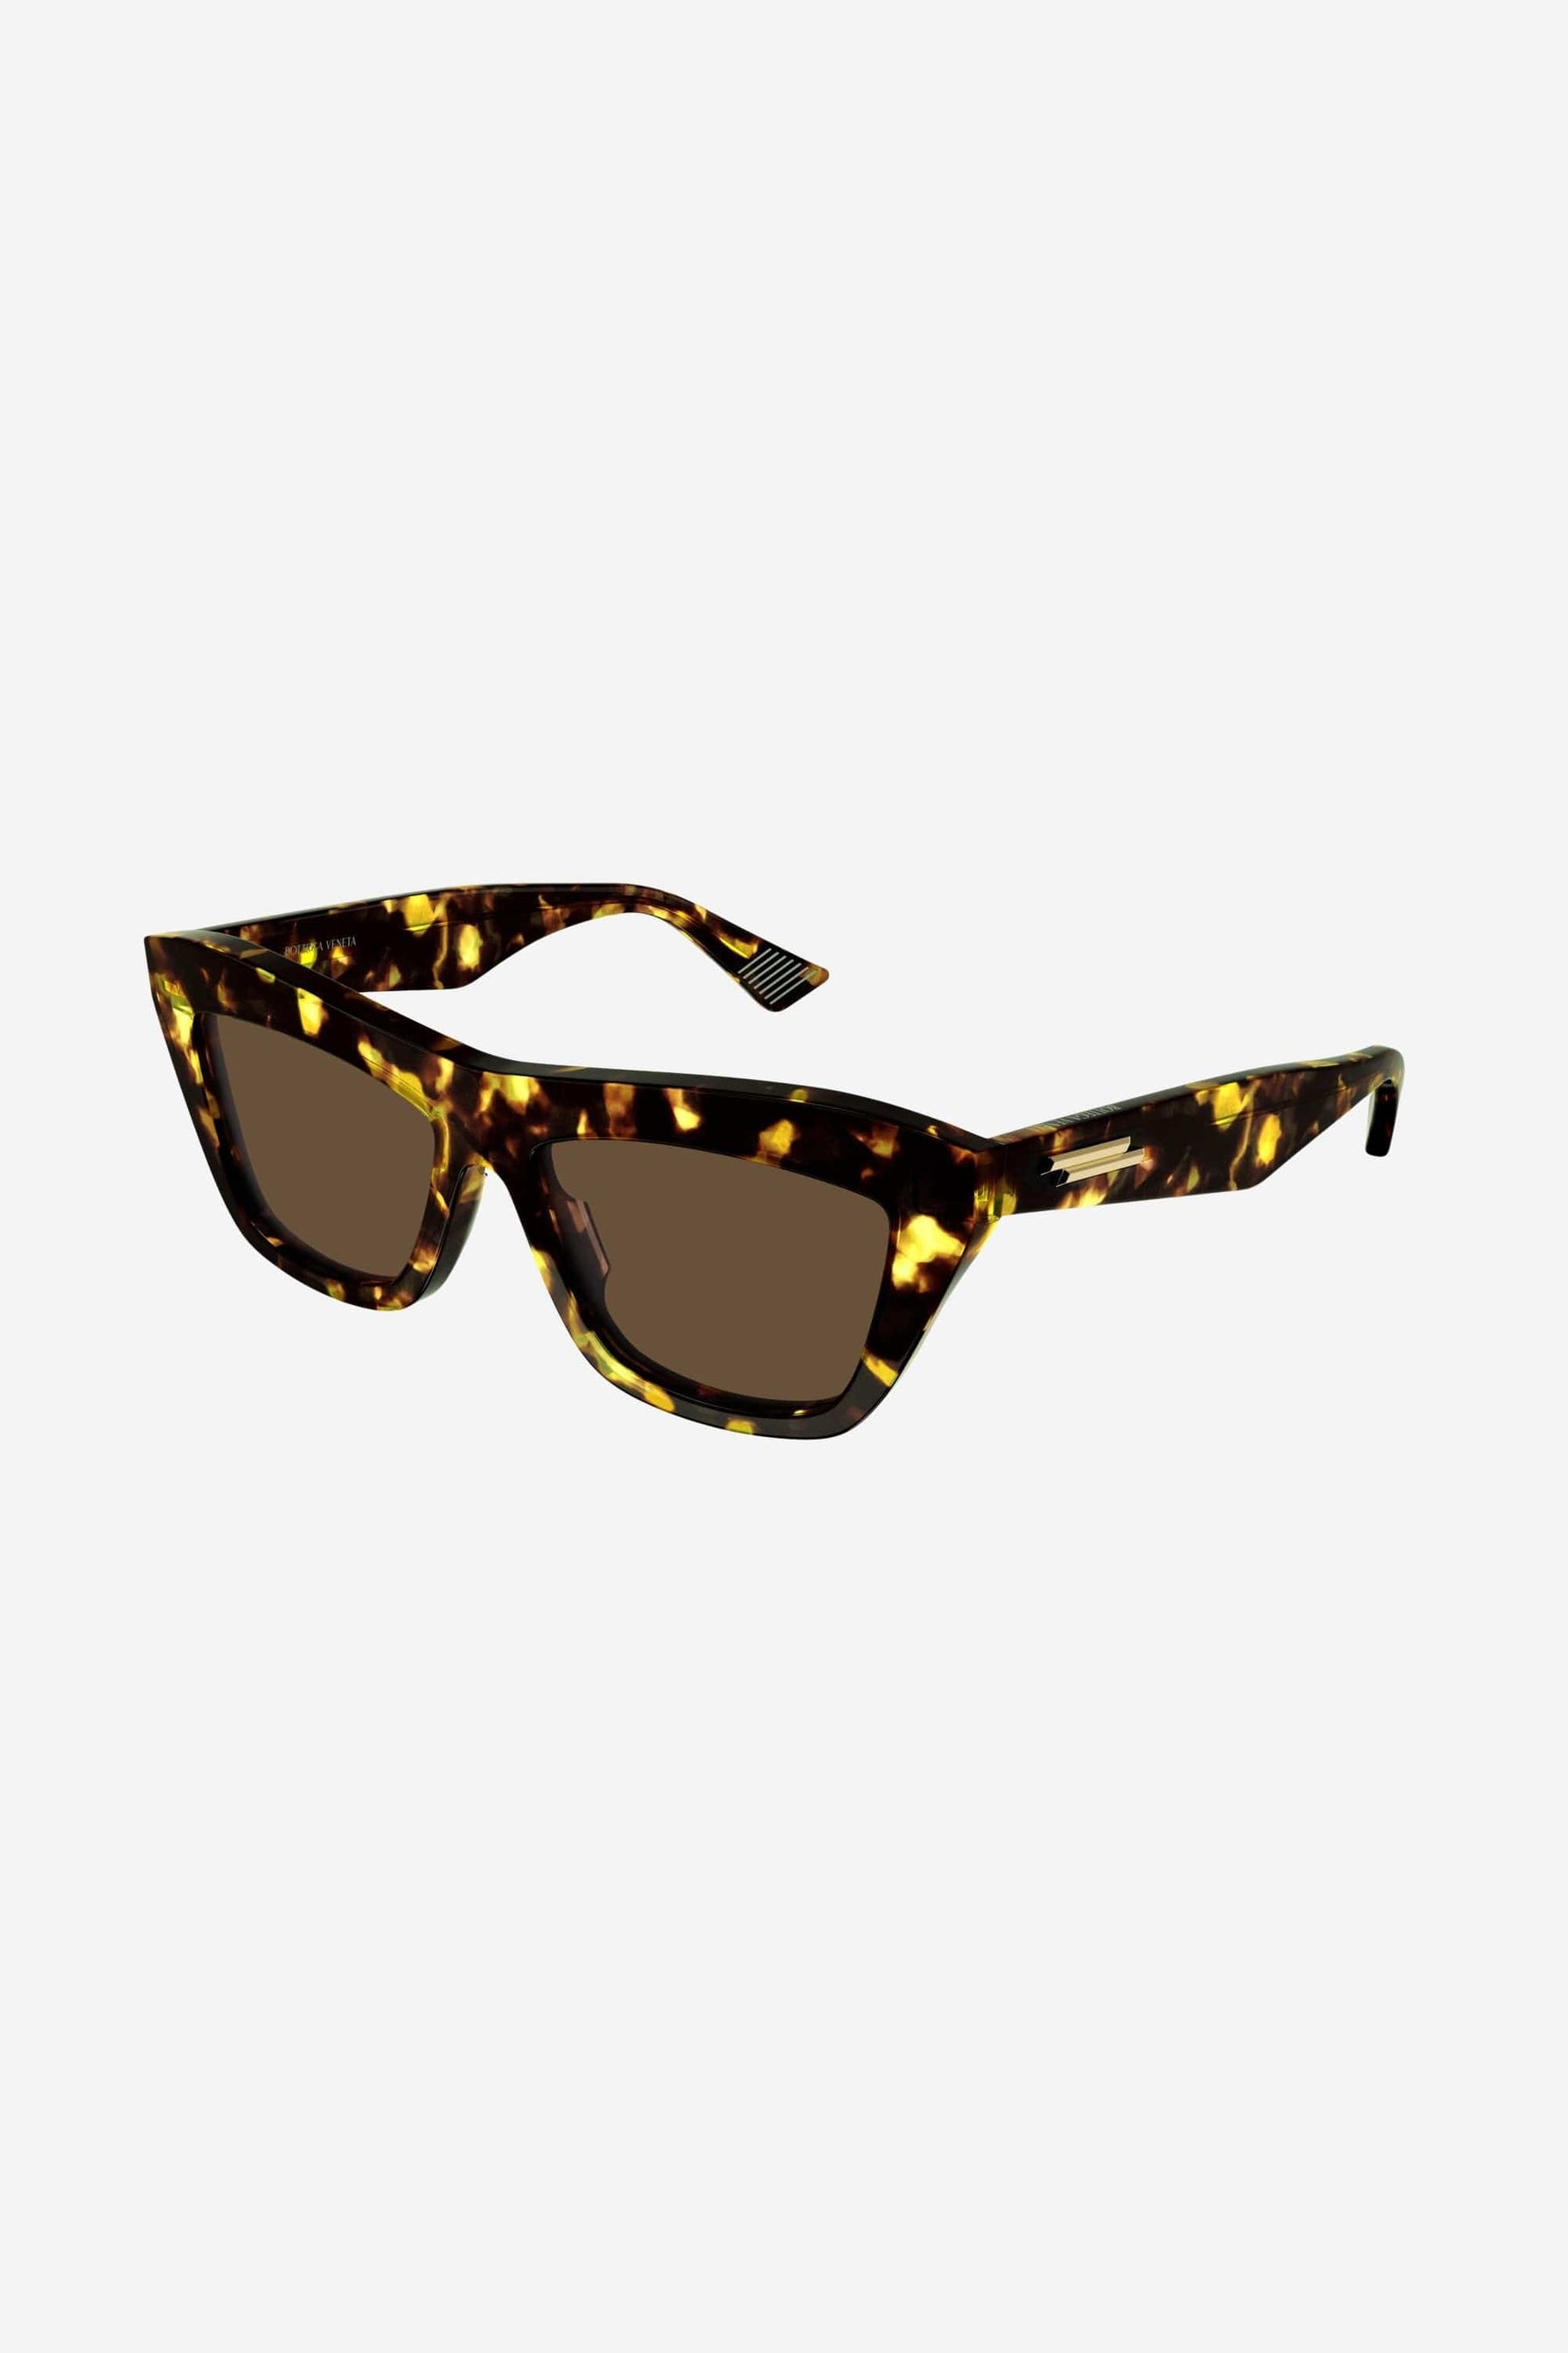 Bottega Veneta squared cat eye havana sunglasses - Eyewear Club